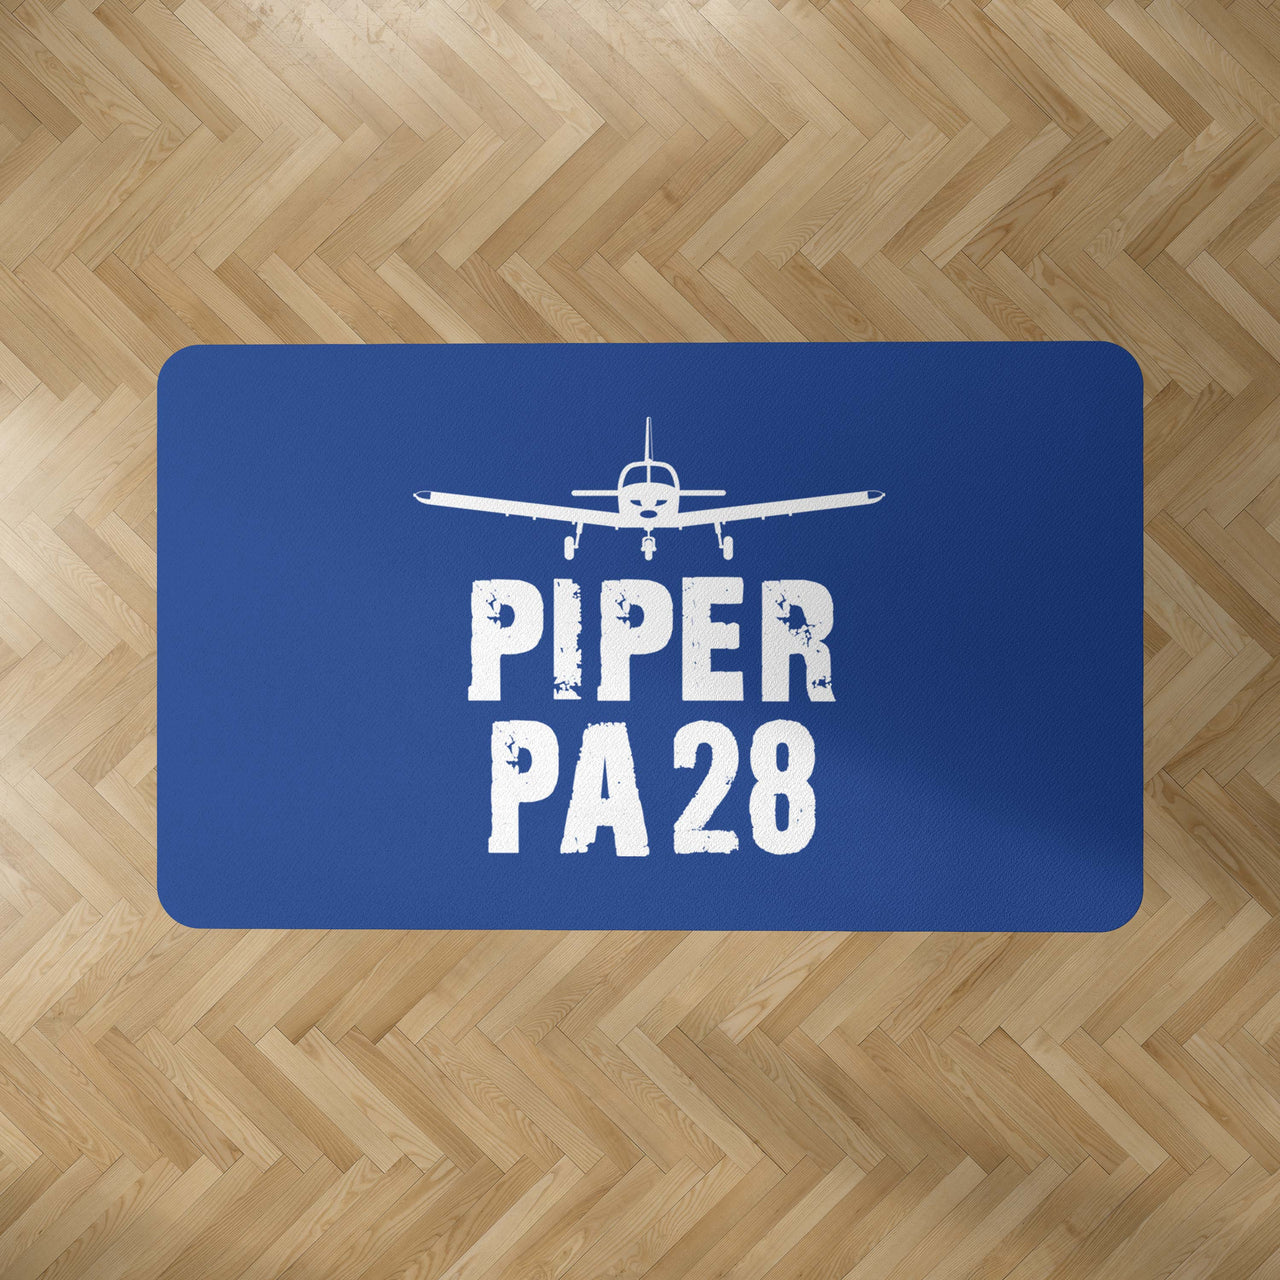 Piper PA28 & Plane Designed Carpet & Floor Mats